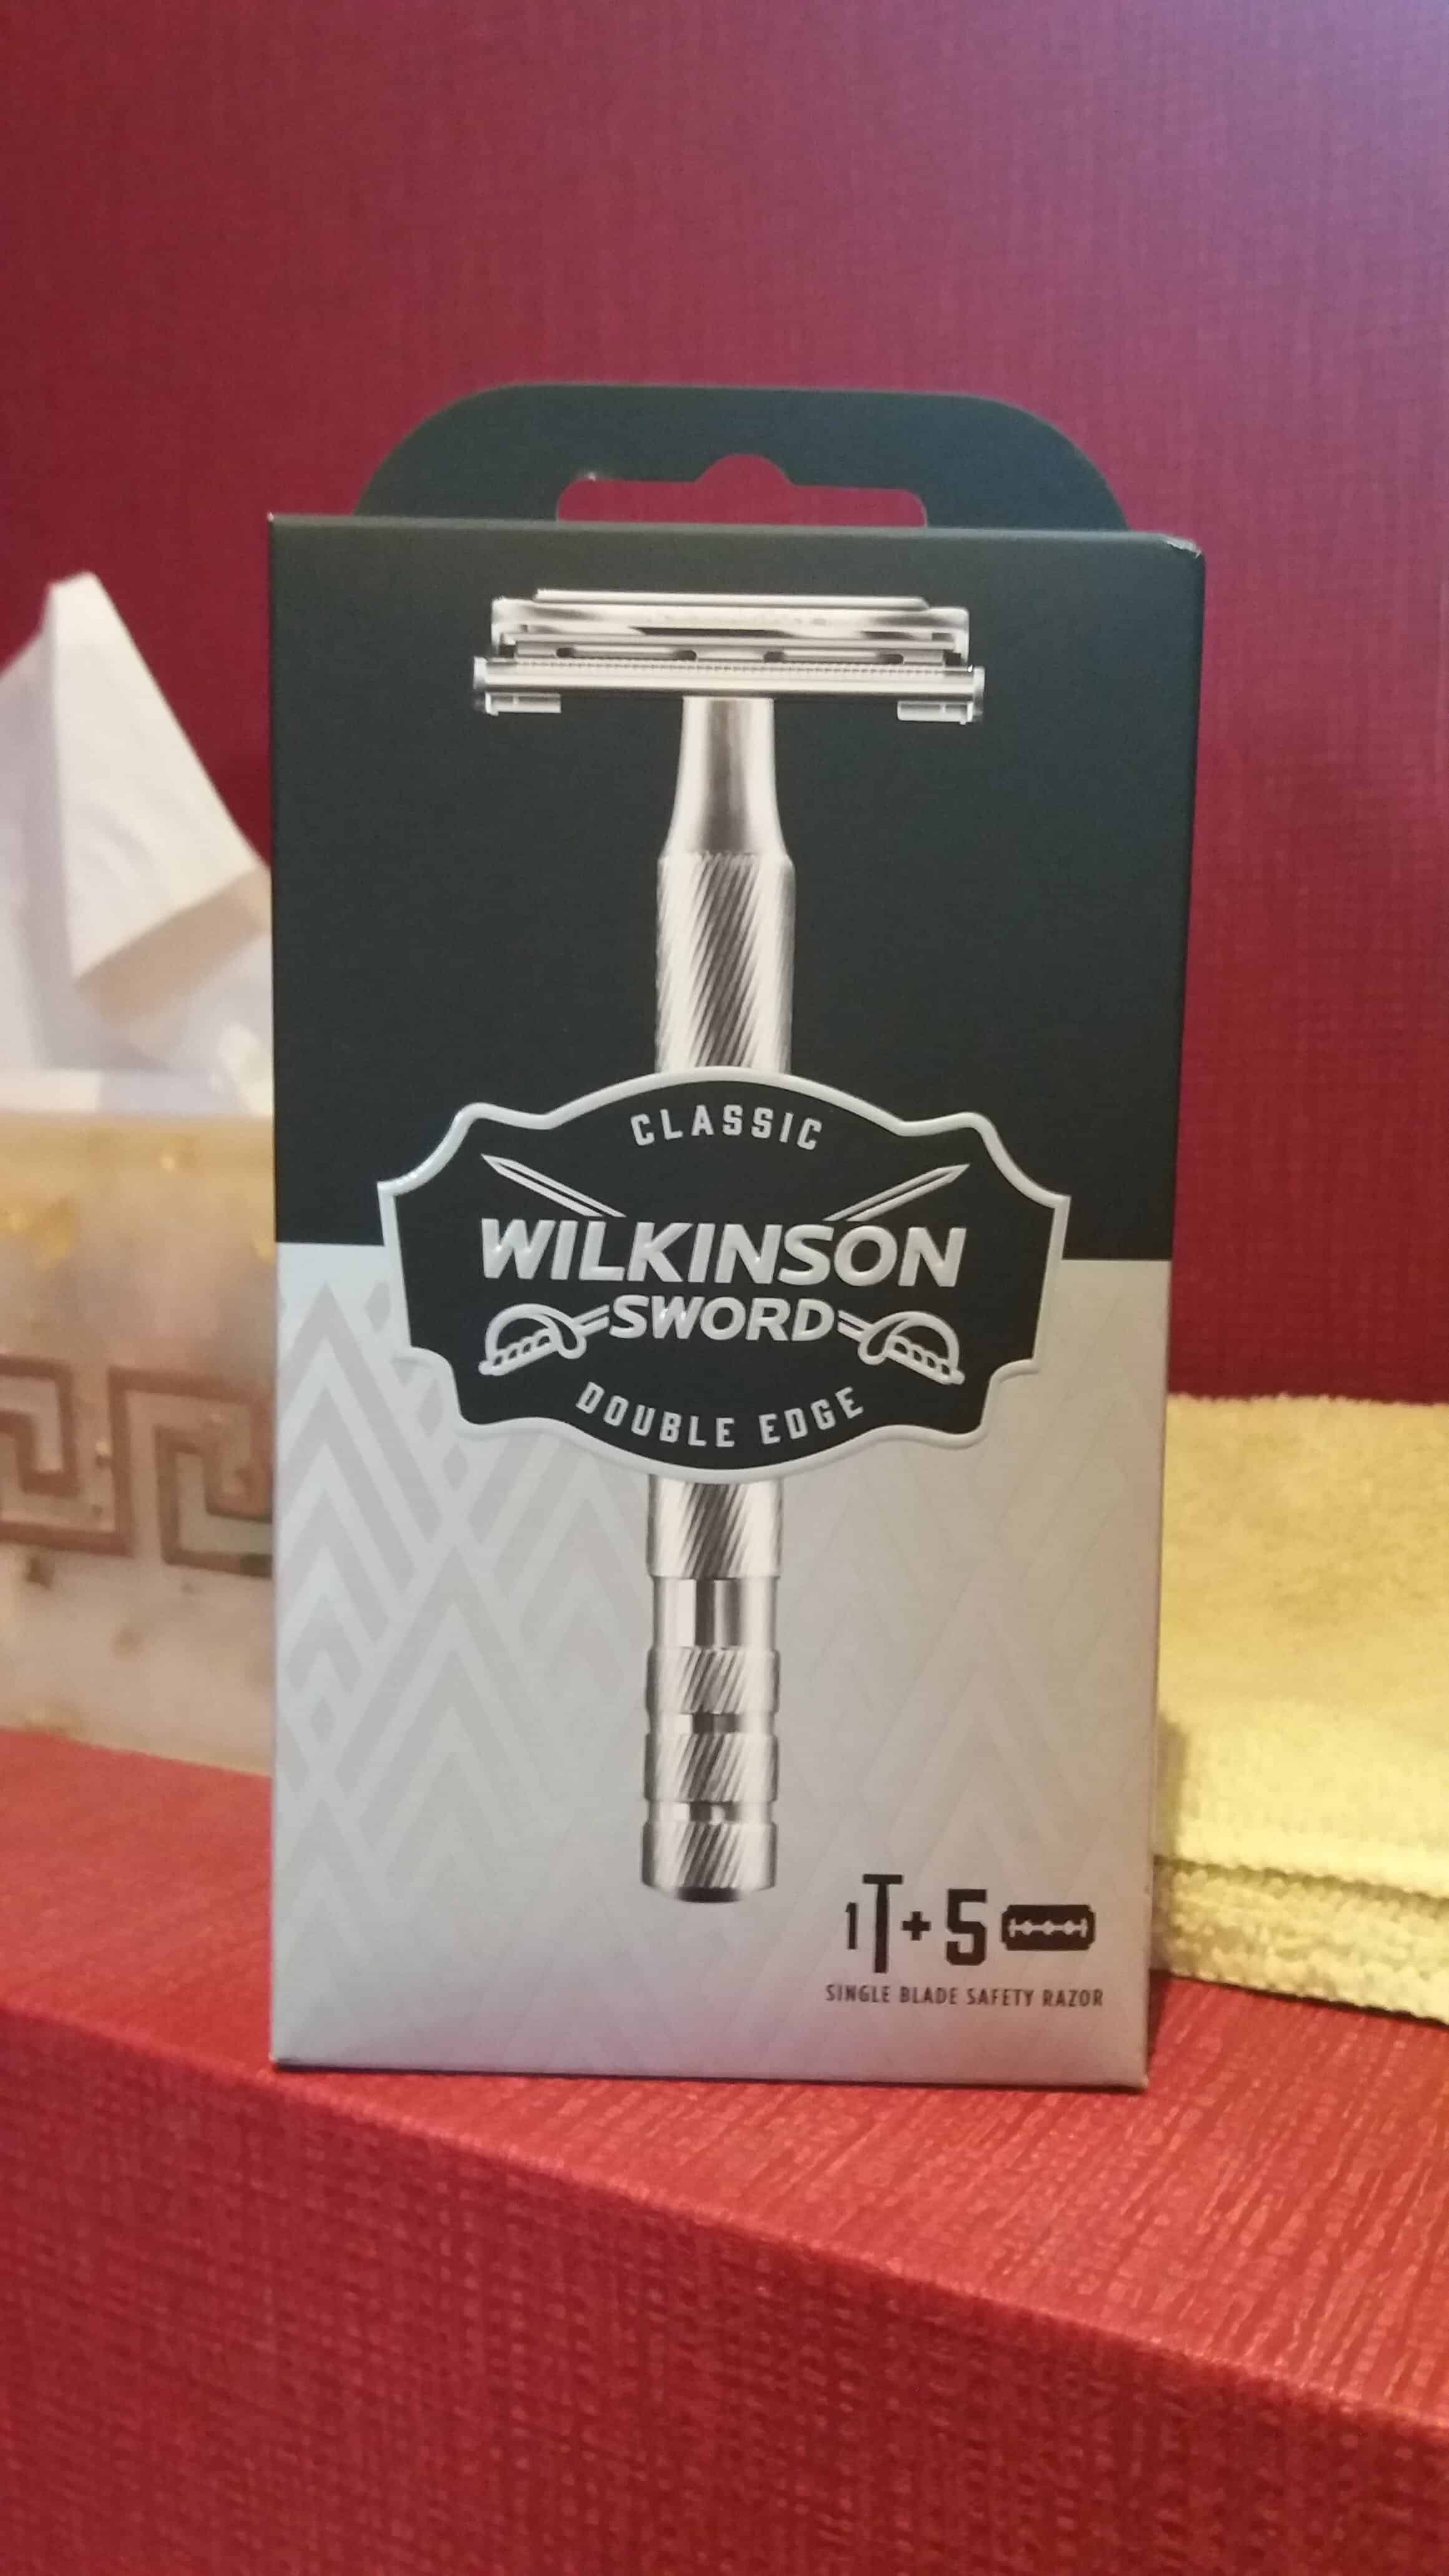 Classic Wilkinson Sword Double Edge Review